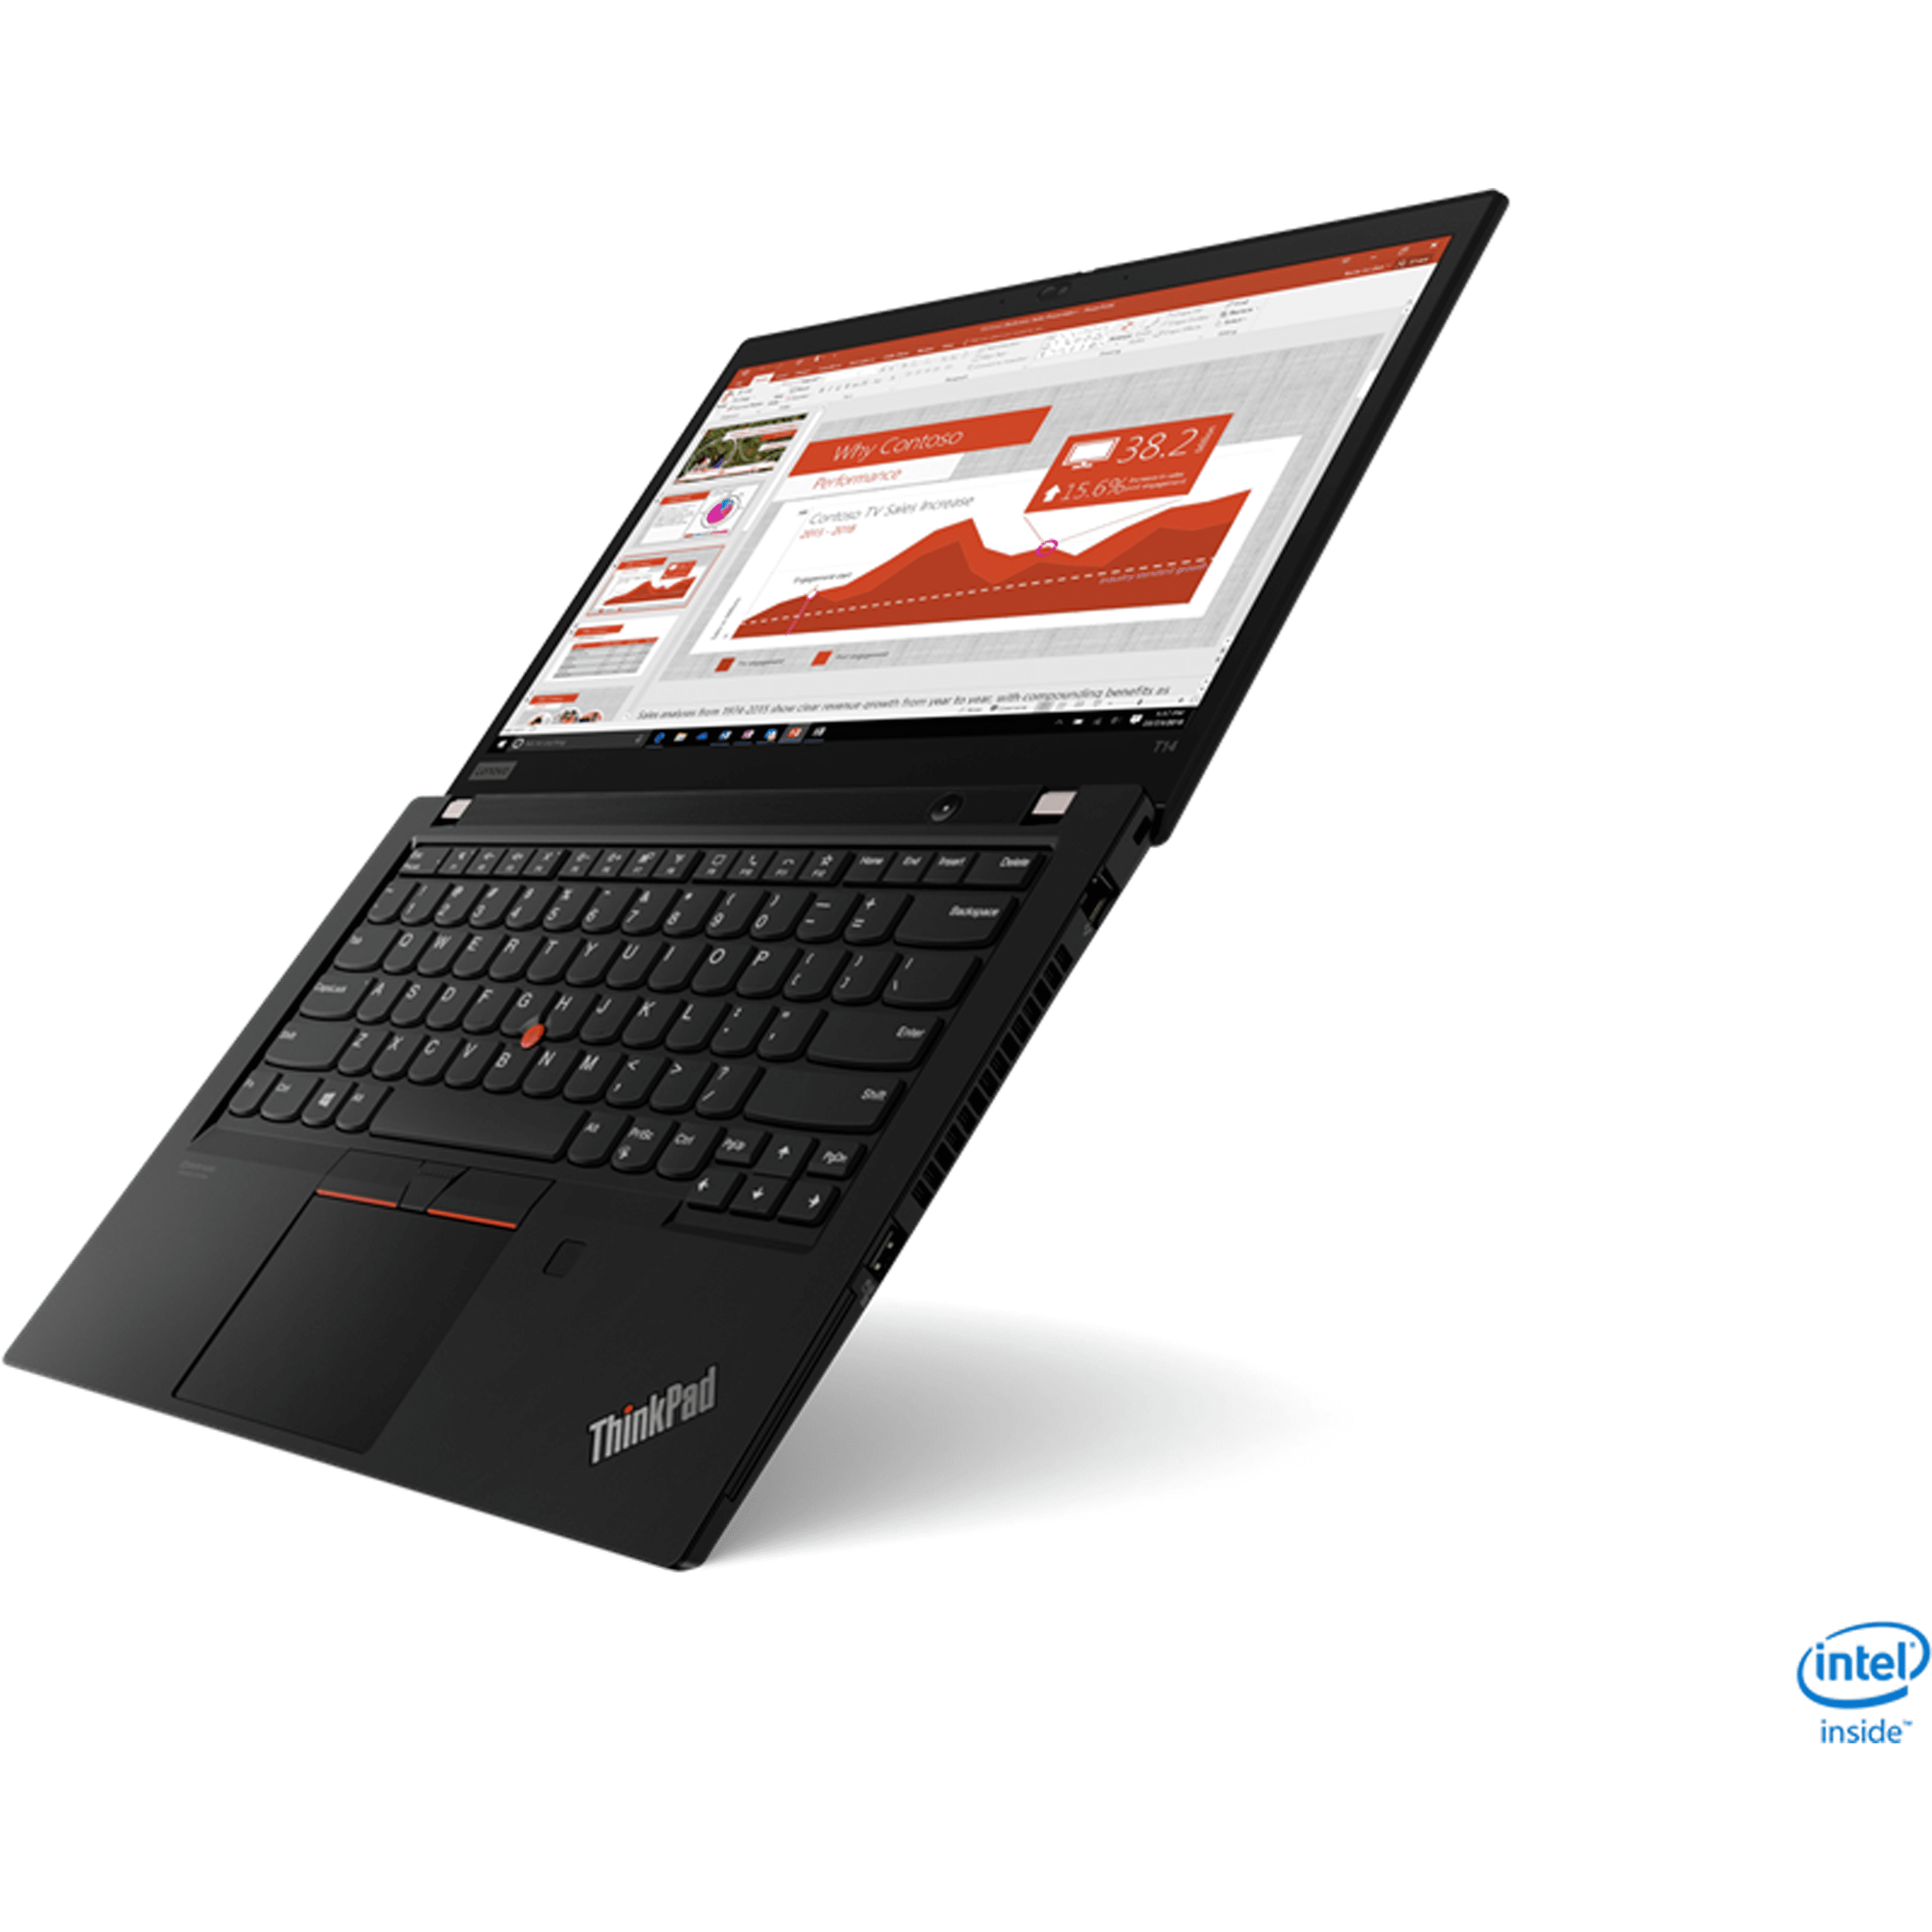 Lenovo ThinkPad Yoga 20cds02v00 i3-4010u/4gb/128gb SSD/12.5" Touch/WIN 10 PCS 